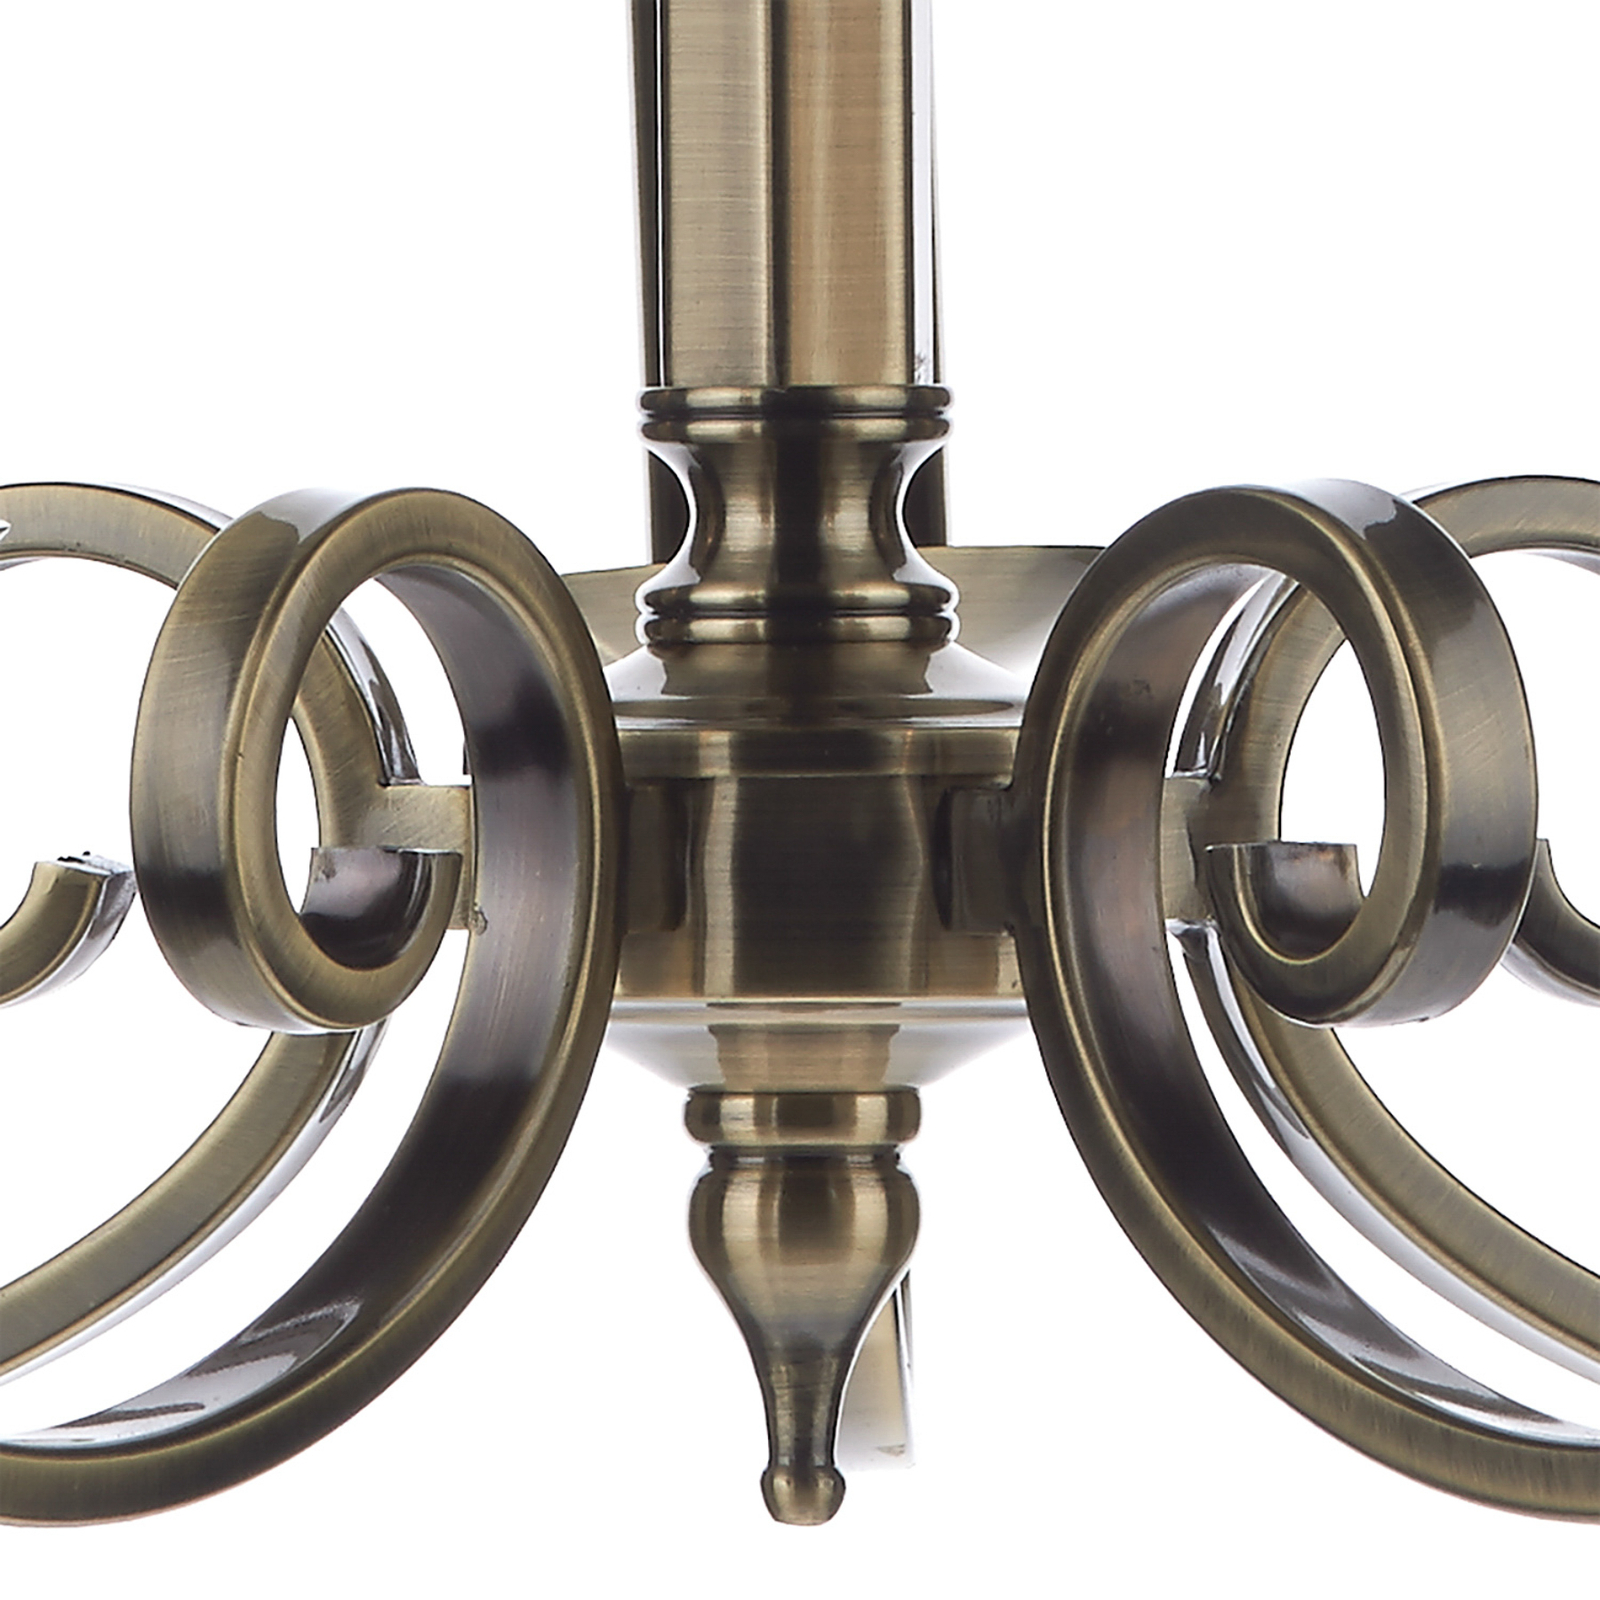 Murray chandelier in antique brass, 5-bulb